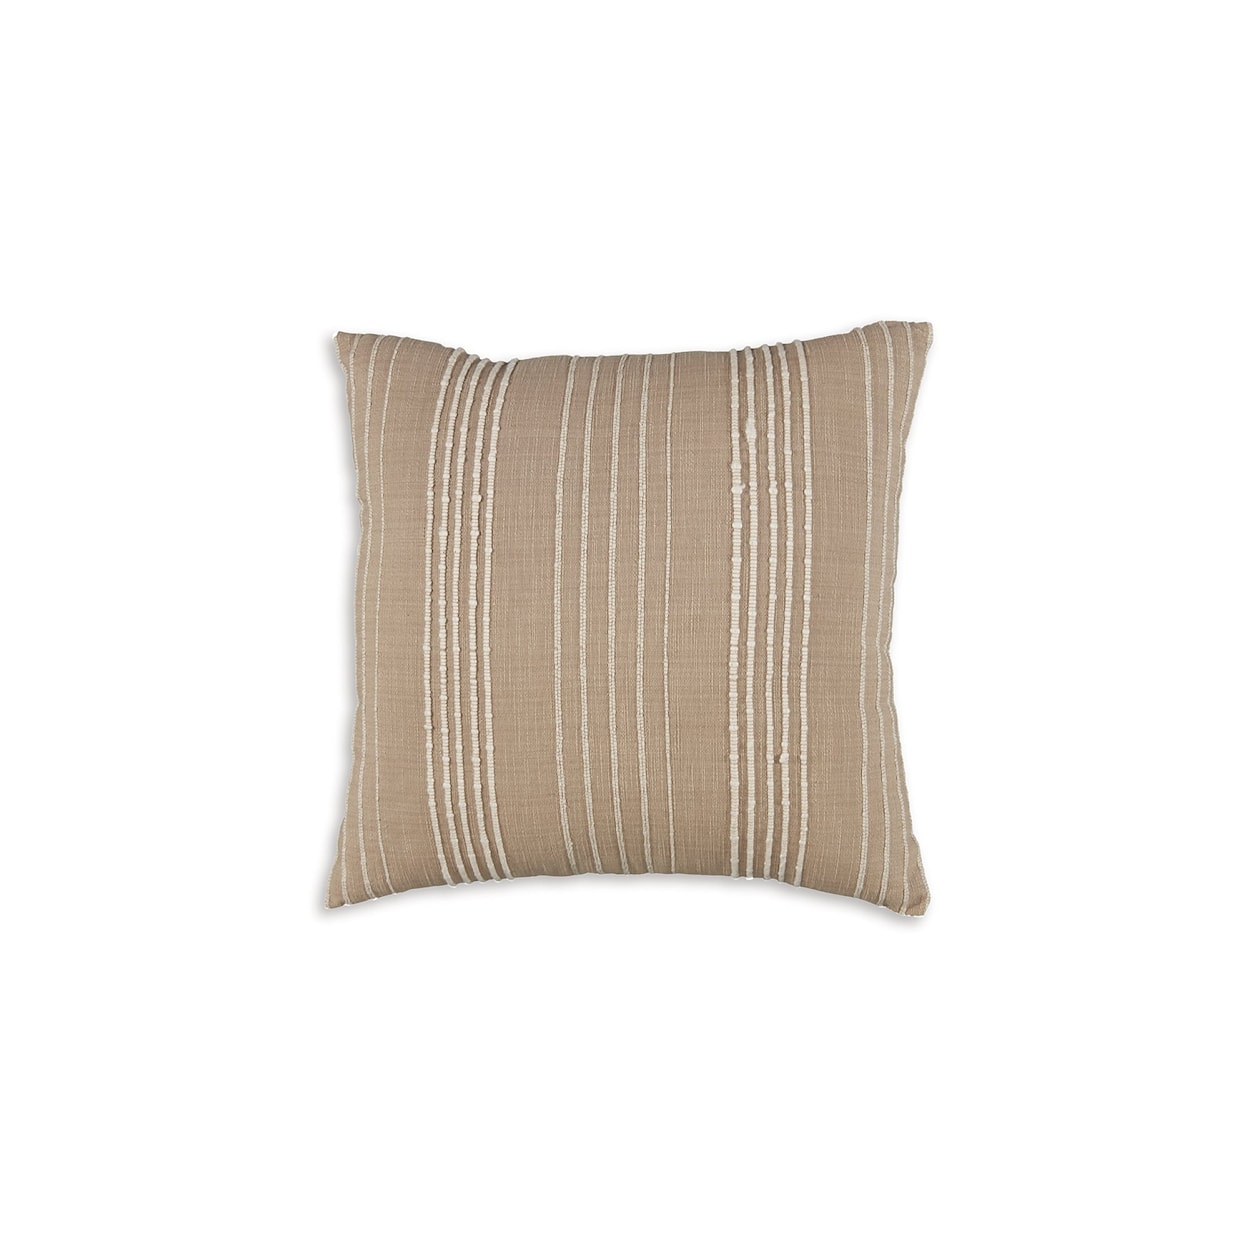 Ashley Furniture Signature Design Benbert Pillow (Set of 4)